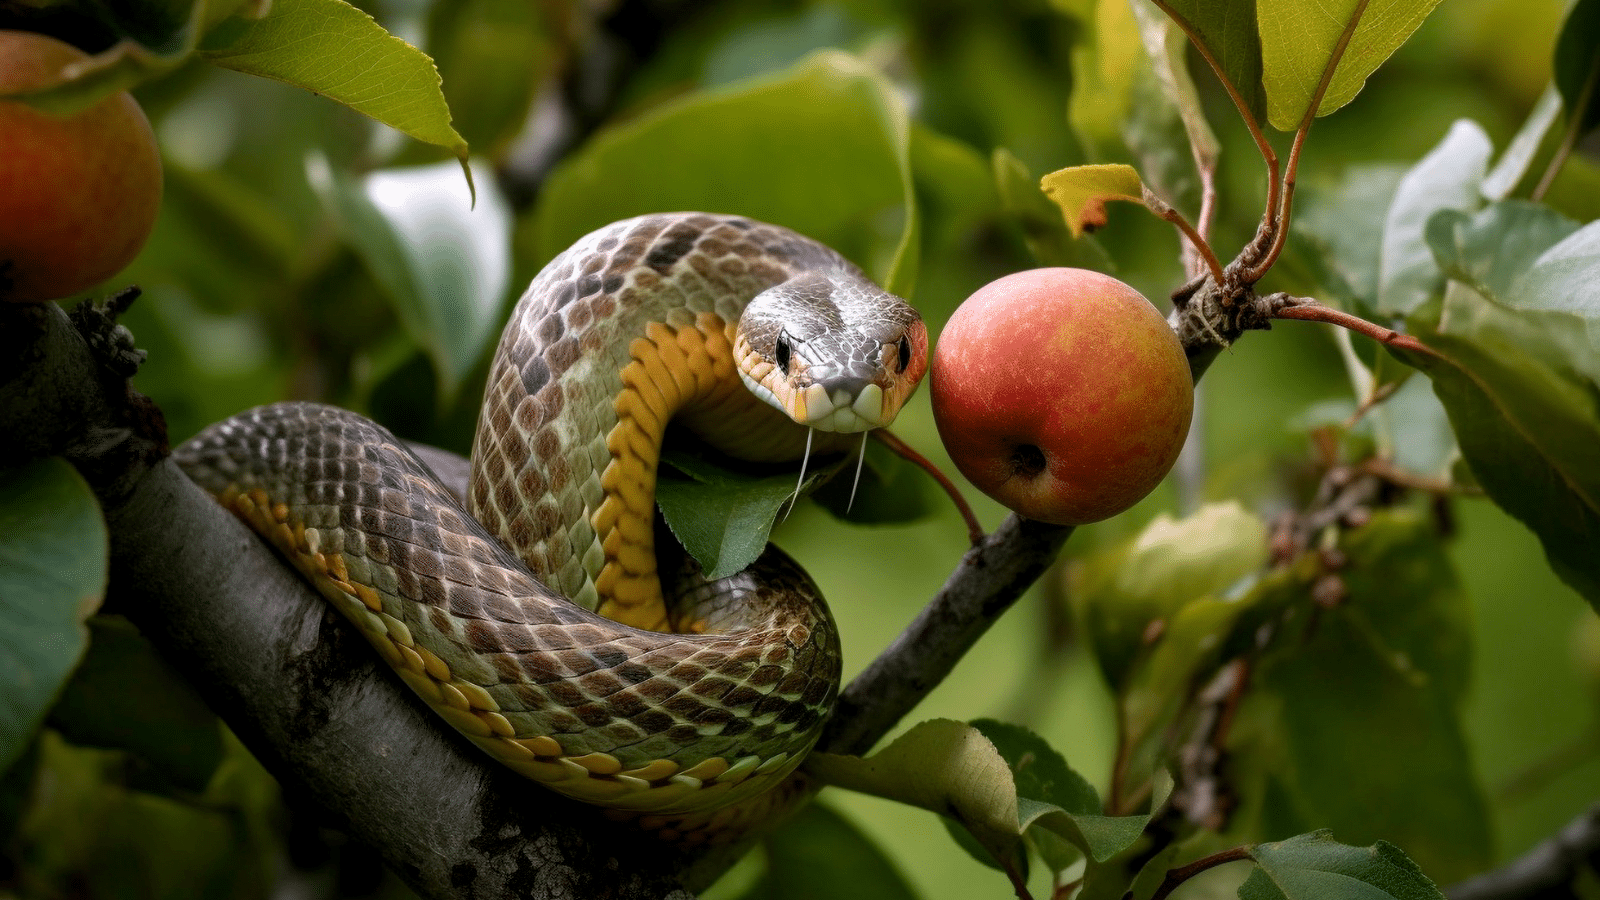 Snake next to apple